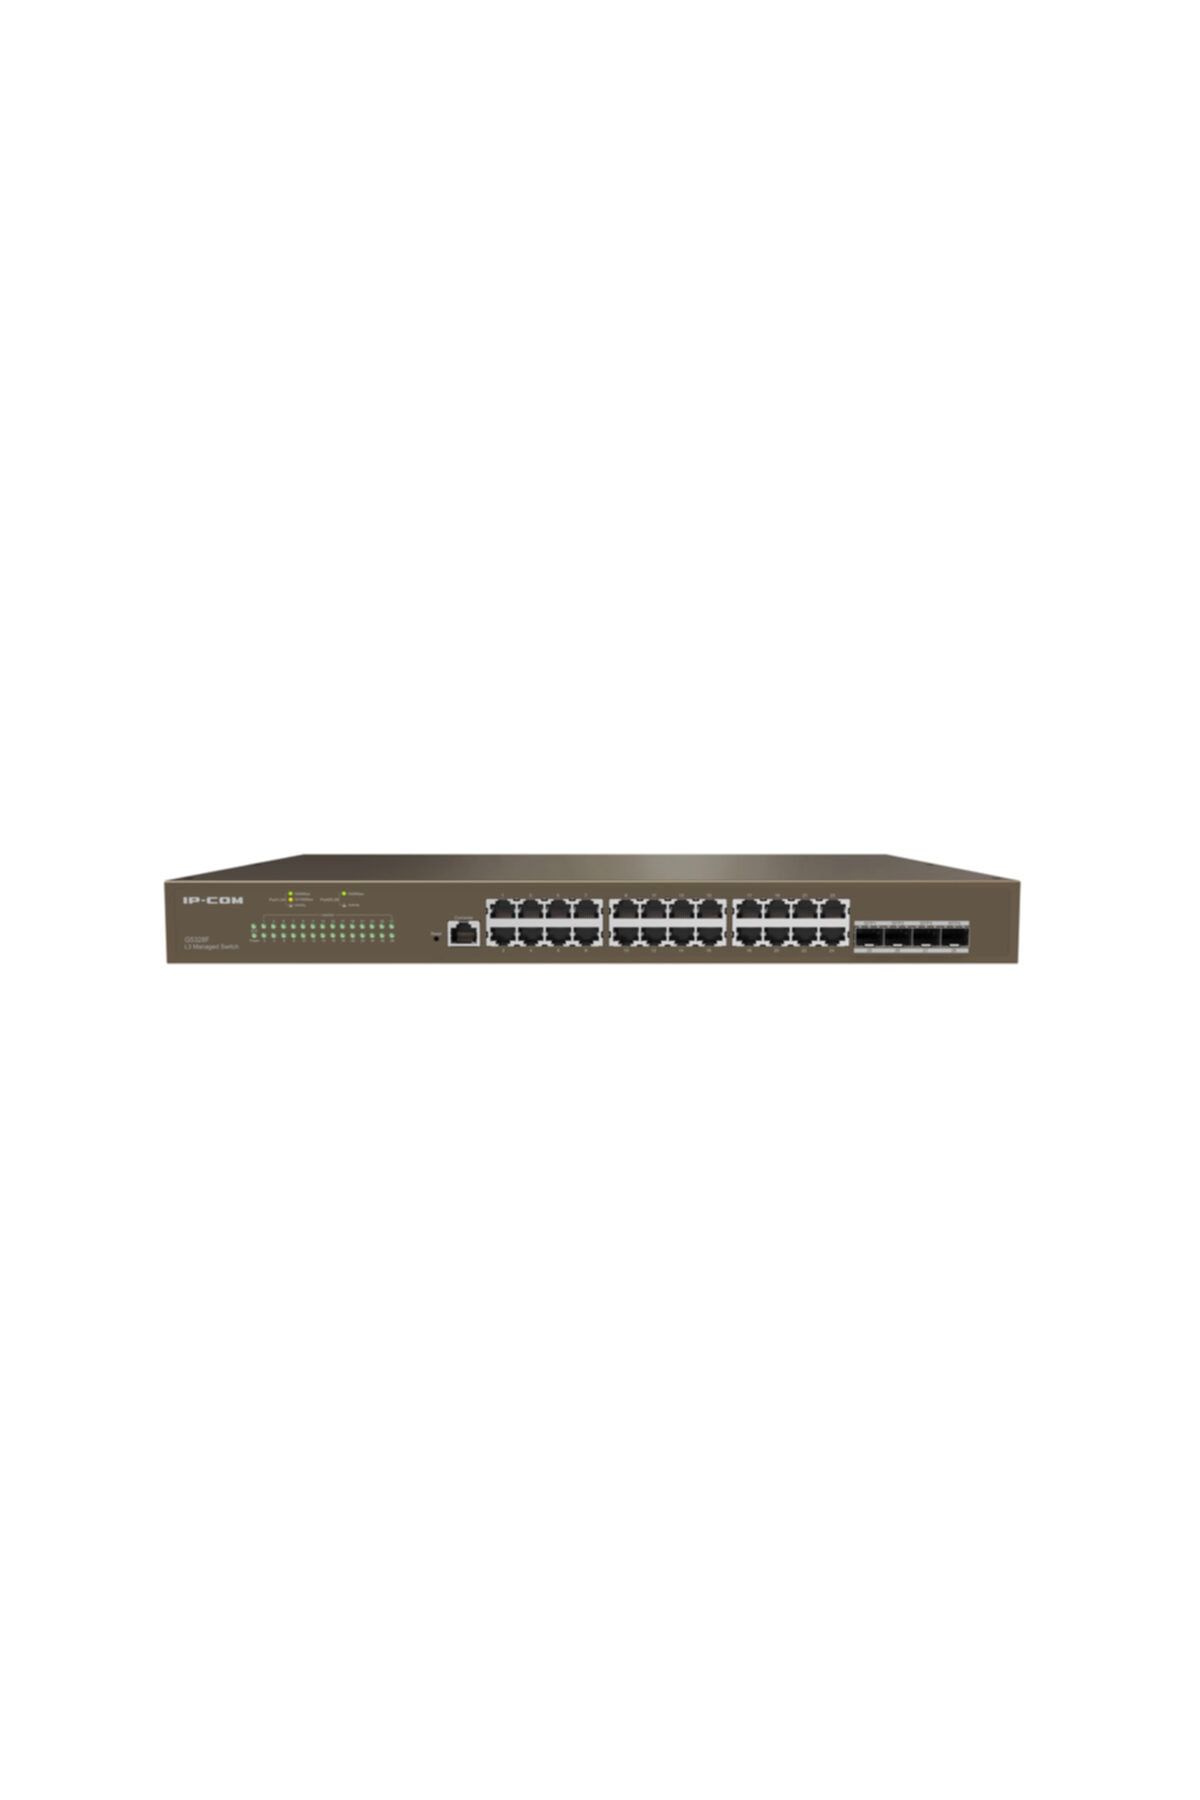 IP-COM G5328f 24ge Rj45 Ports,4ge Sfp Port Layer 3 Switch